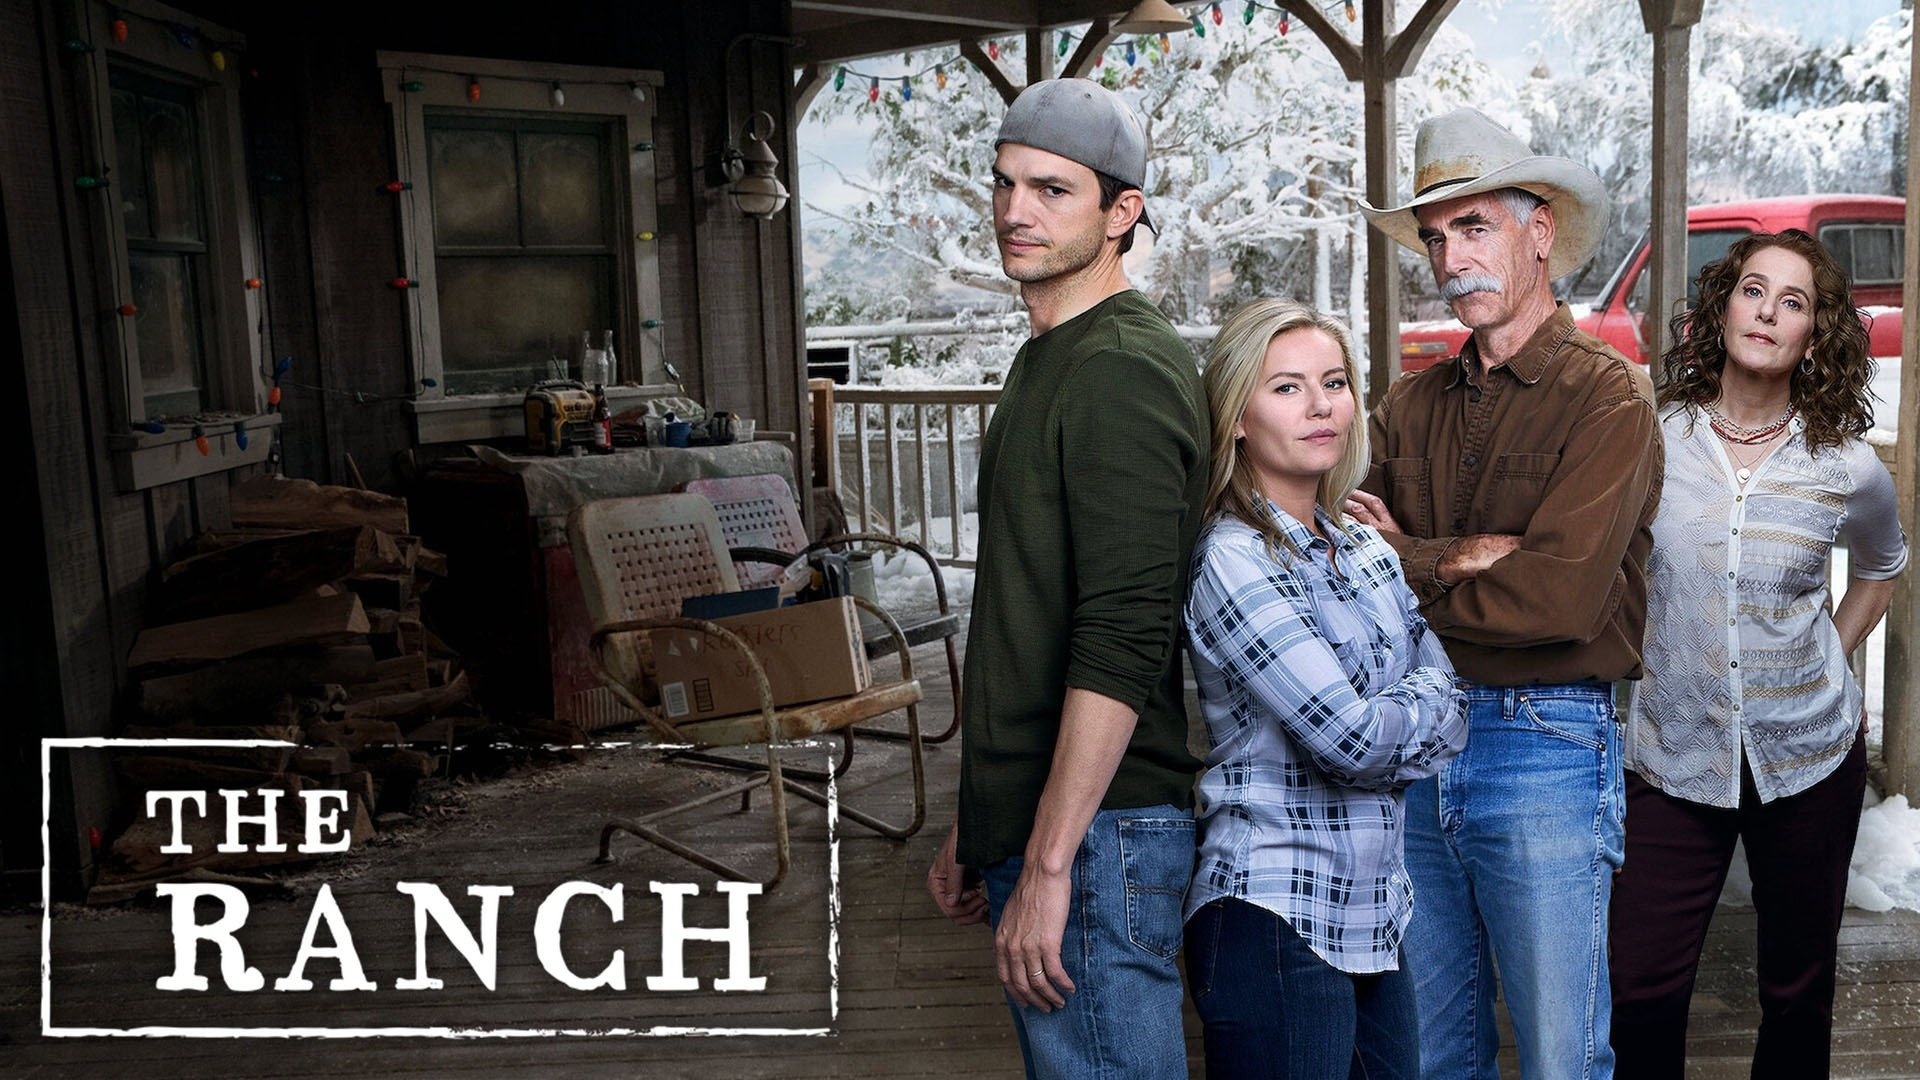 The Ranch, Ranch life hijinks, Heartwarming relationships, Small-town charm, 1920x1080 Full HD Desktop